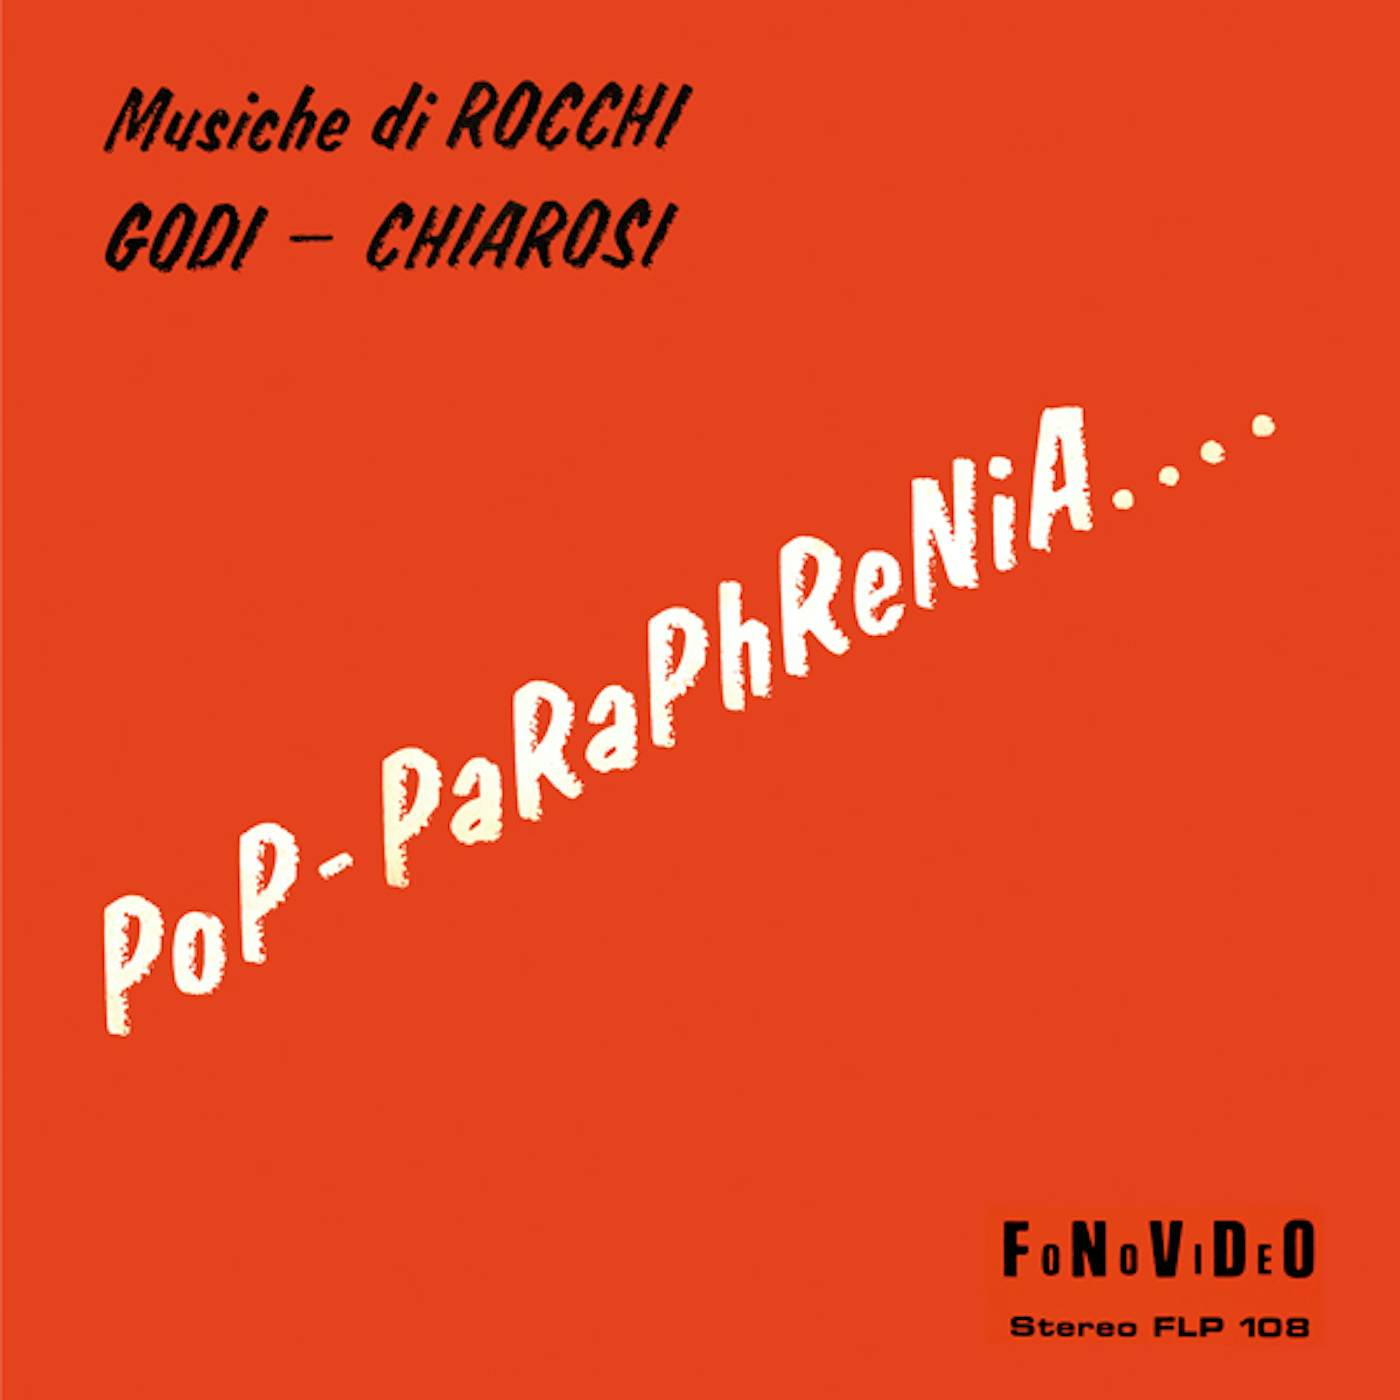 ROCCHI / GODI / CHIAROSI POP-PARAPHRENIA Vinyl Record